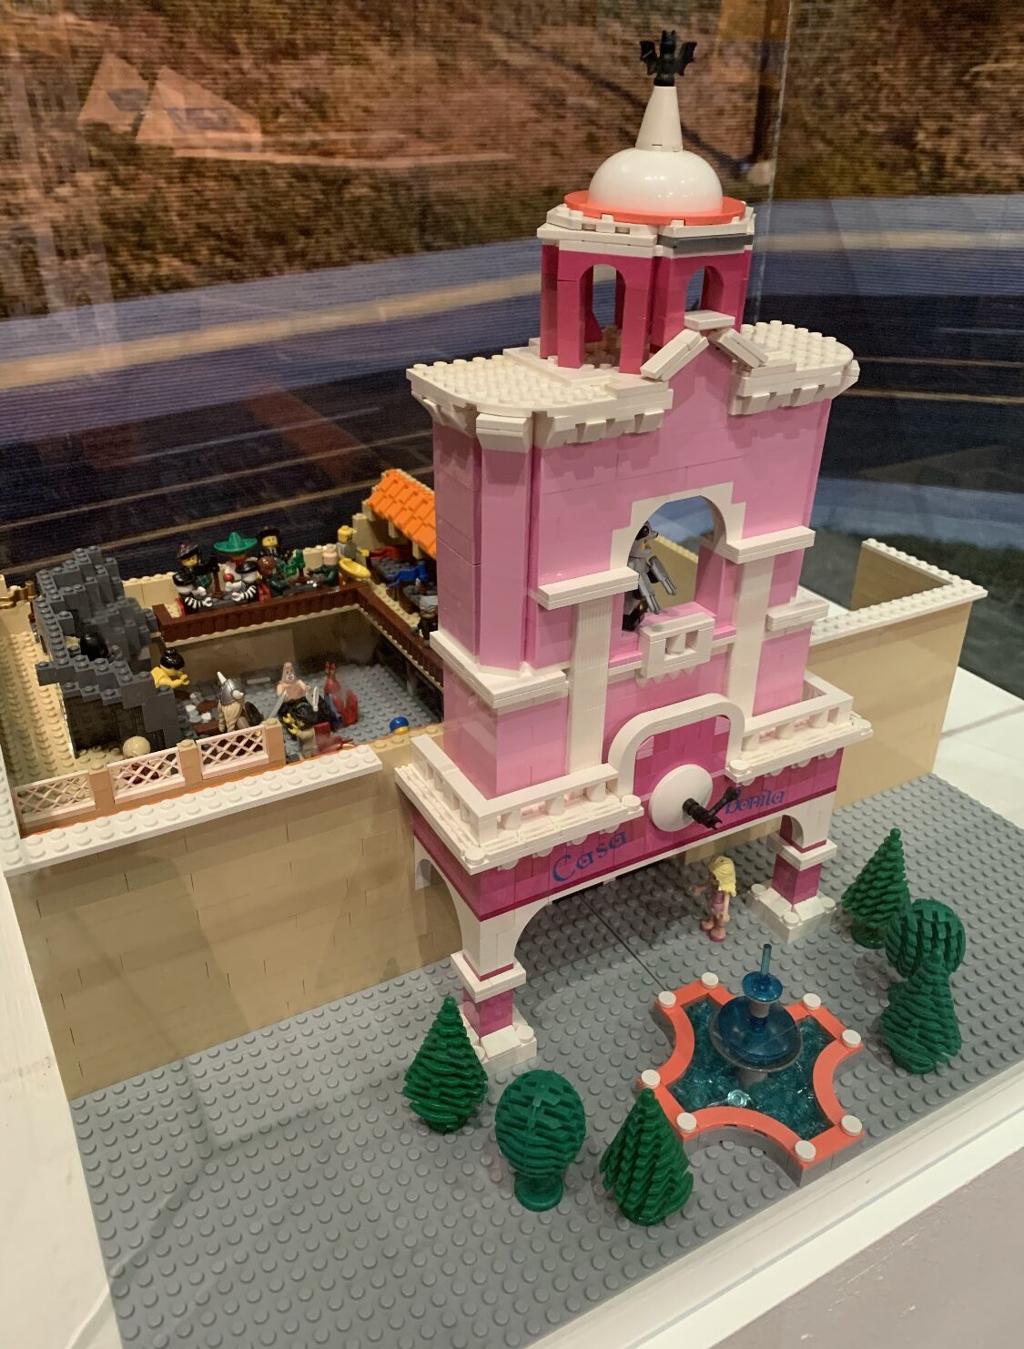 Casa Bonita replica built with thousands of pink Lego bricks